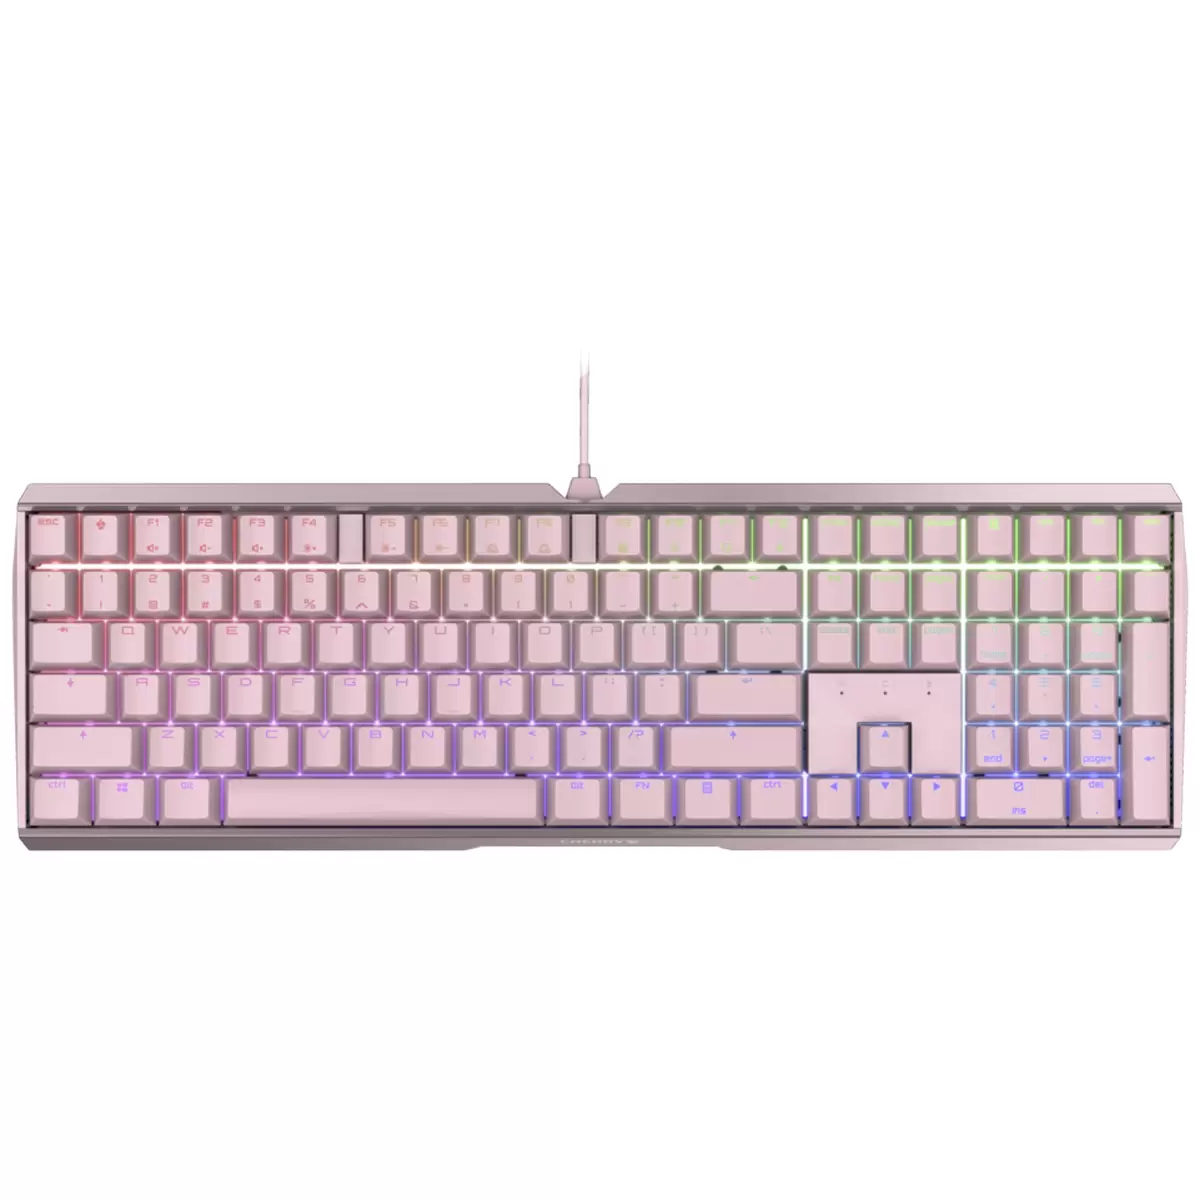 CHERRY MX 3.0S RGB Gaming Keyboard (Pink)  G80-3874HXAEU-9